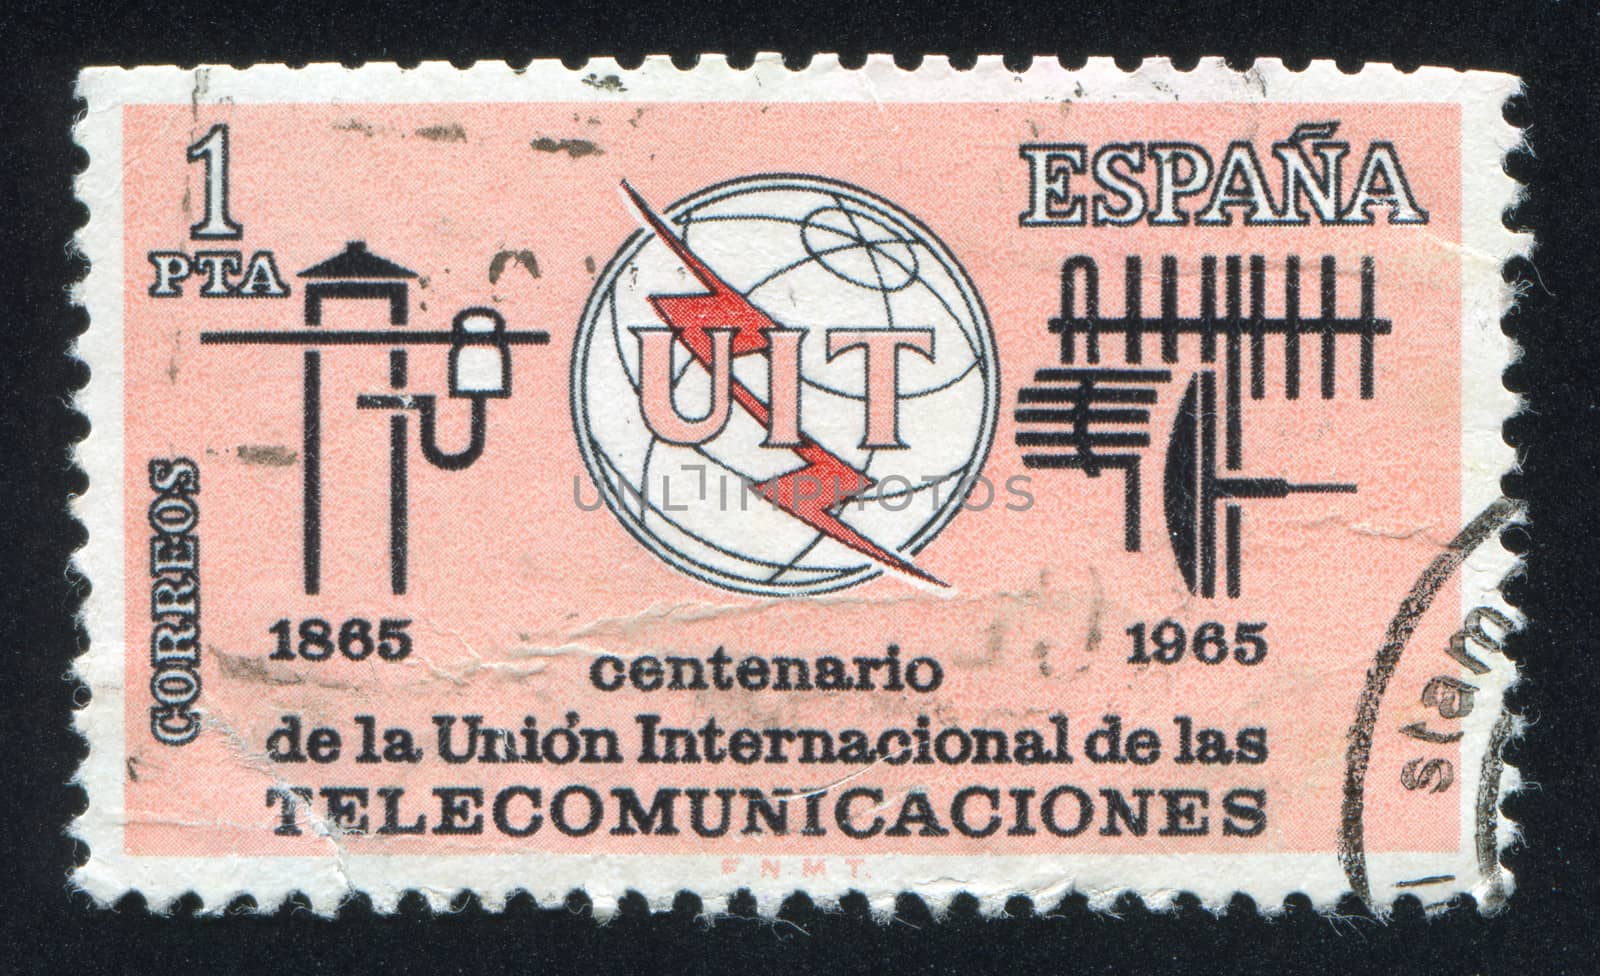 International Telecommunication Union Emblem by rook